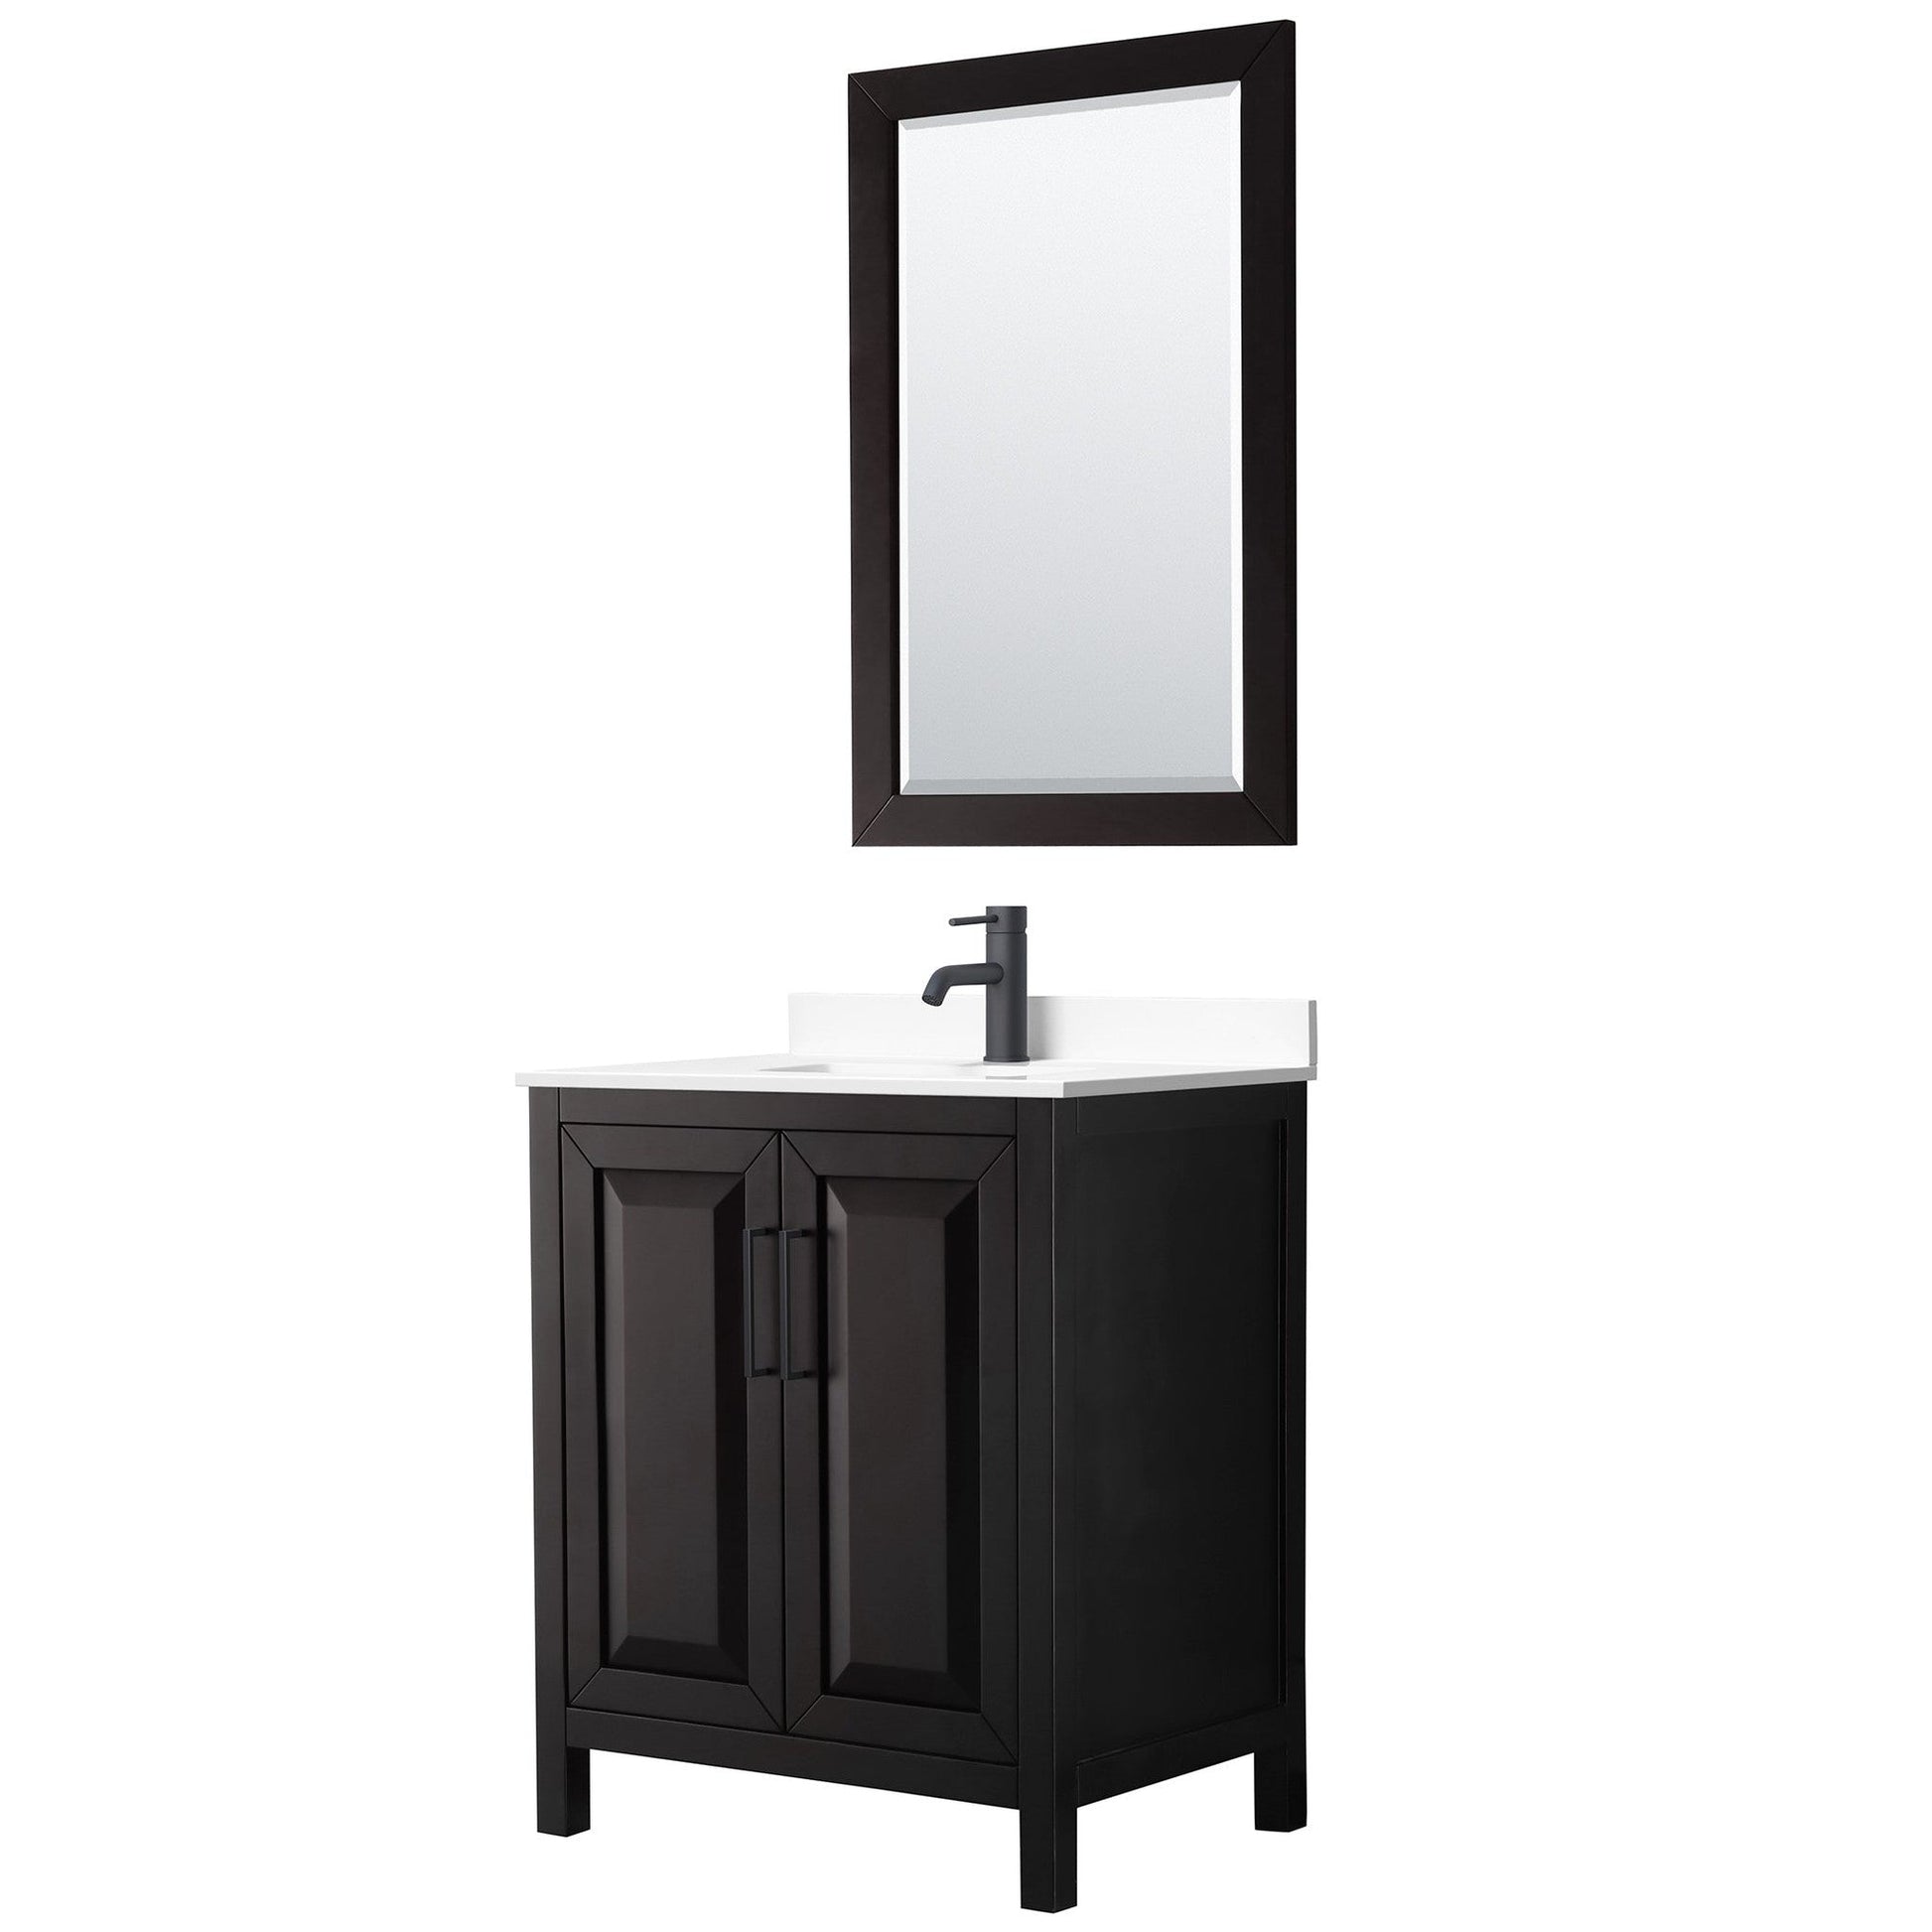 Daria 30" Single Bathroom Vanity in Dark Espresso, White Cultured Marble Countertop, Undermount Square Sink, Matte Black Trim, 24" Mirror